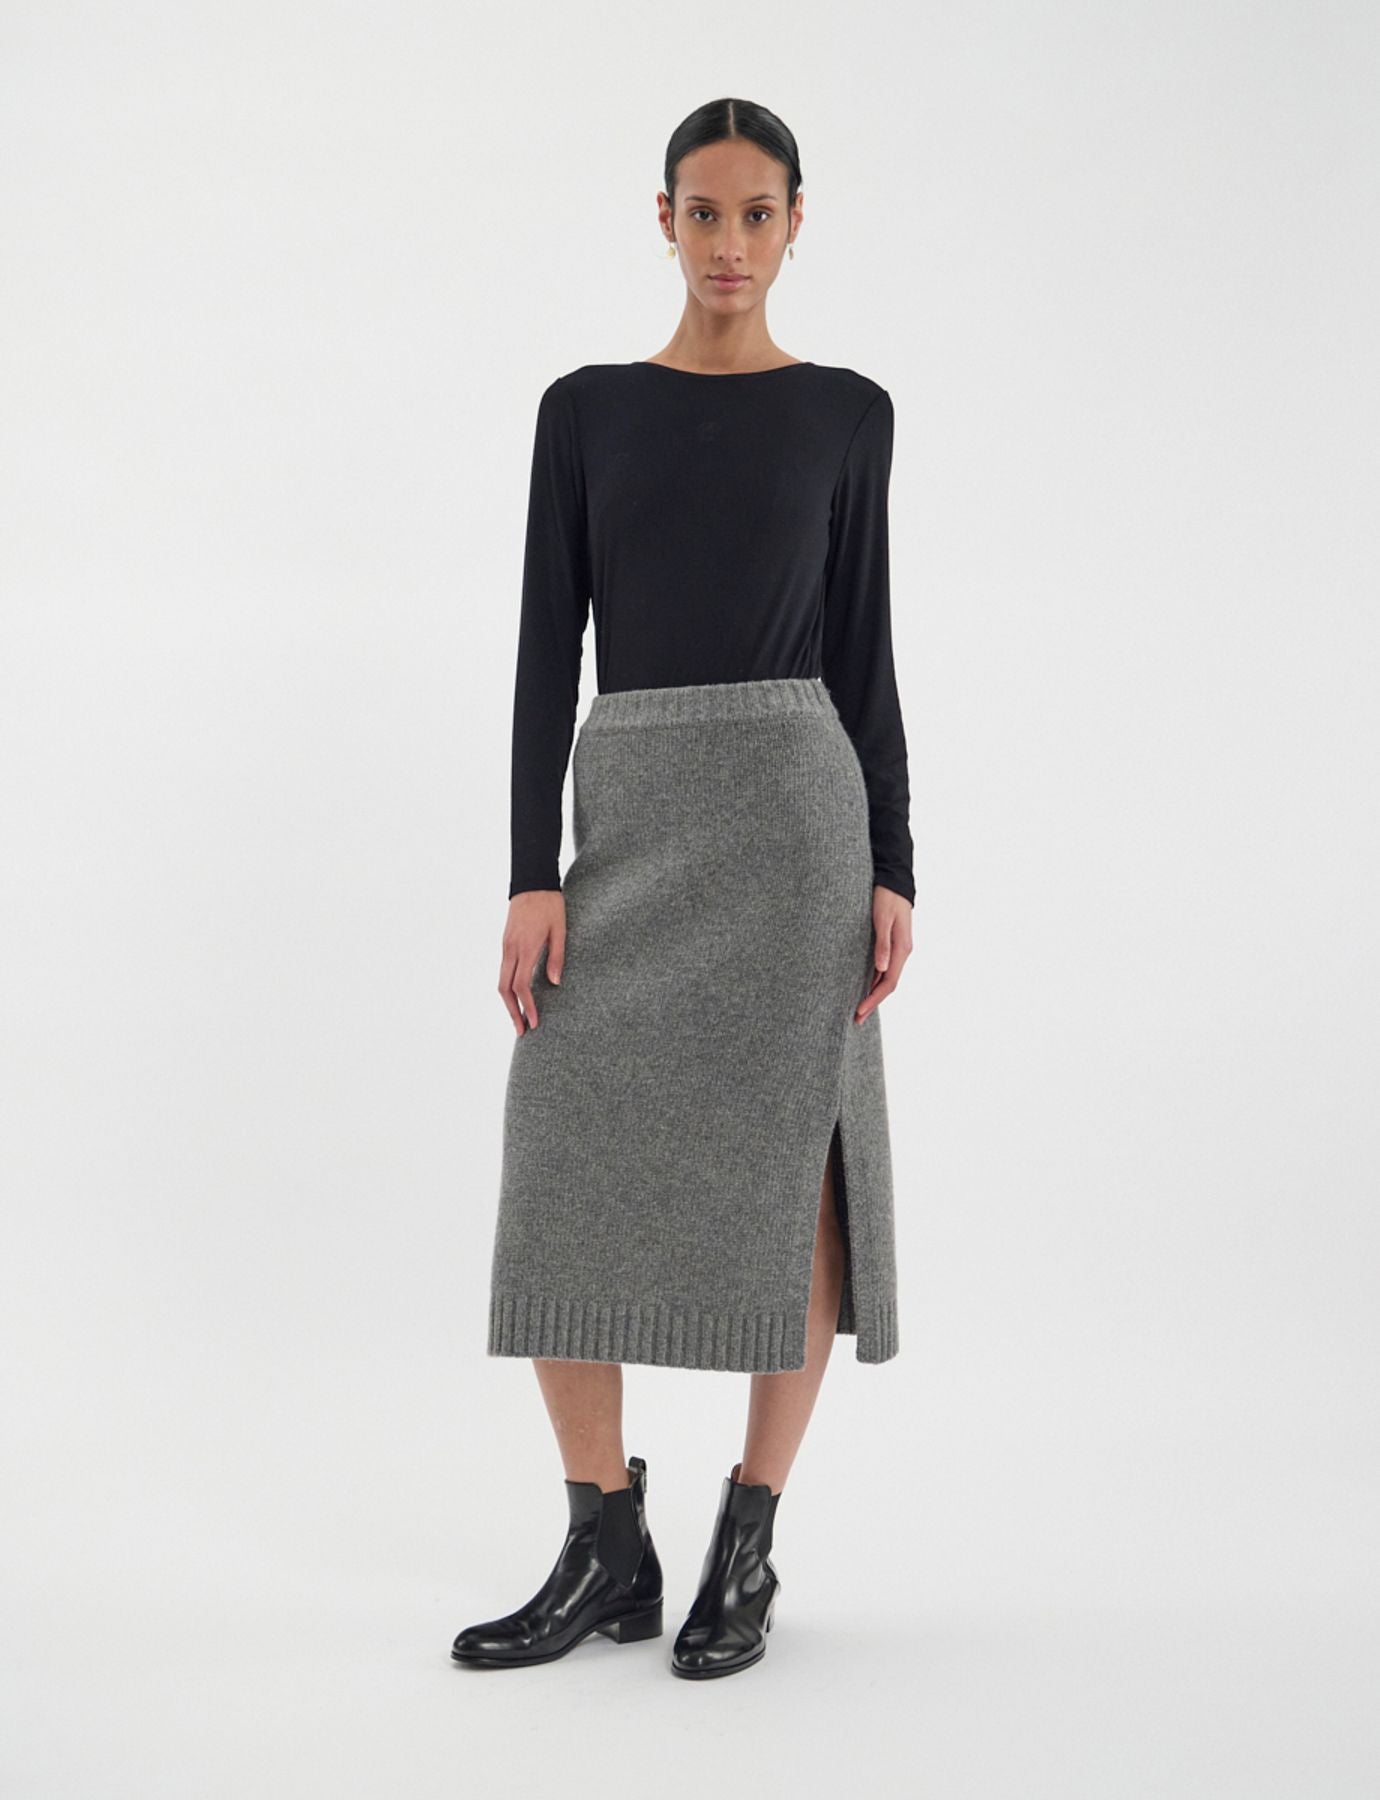 skirt-damia-cashmere-rws-gray